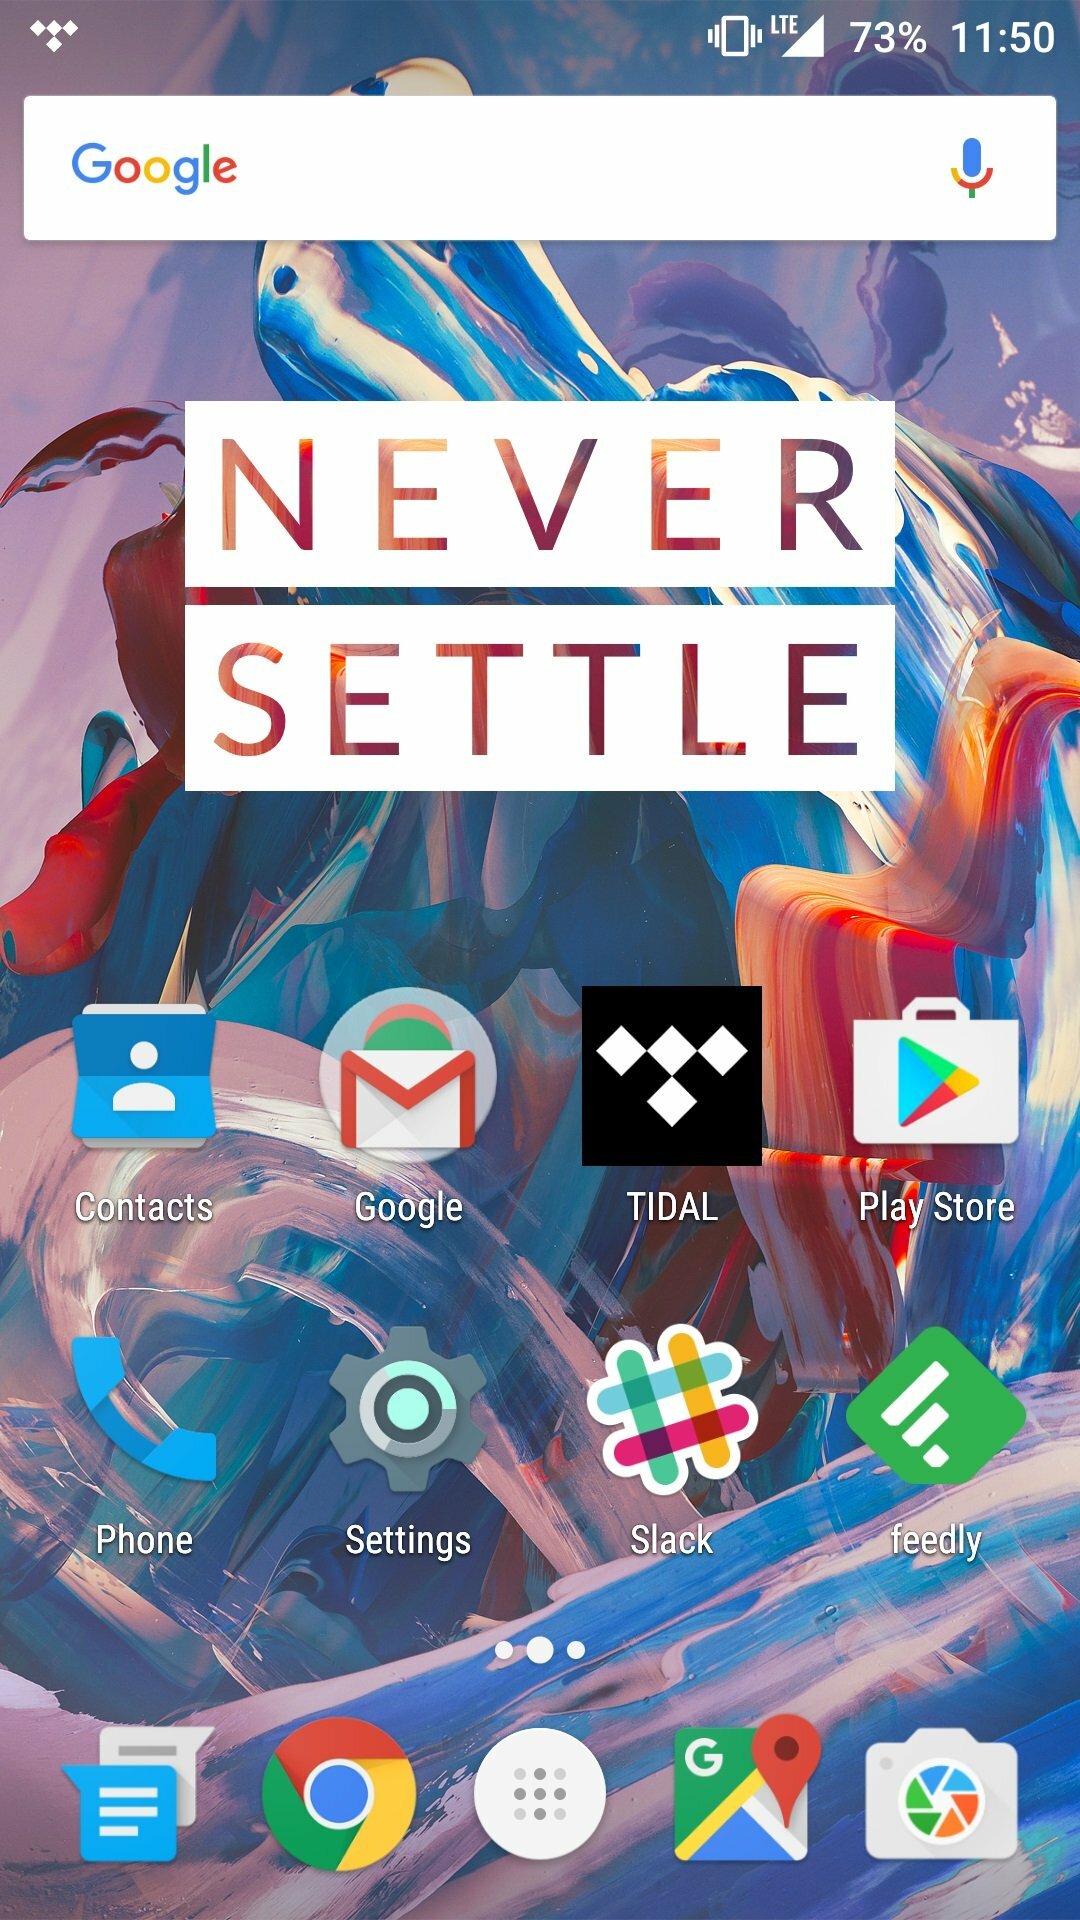 OnePlus 3 smartphone